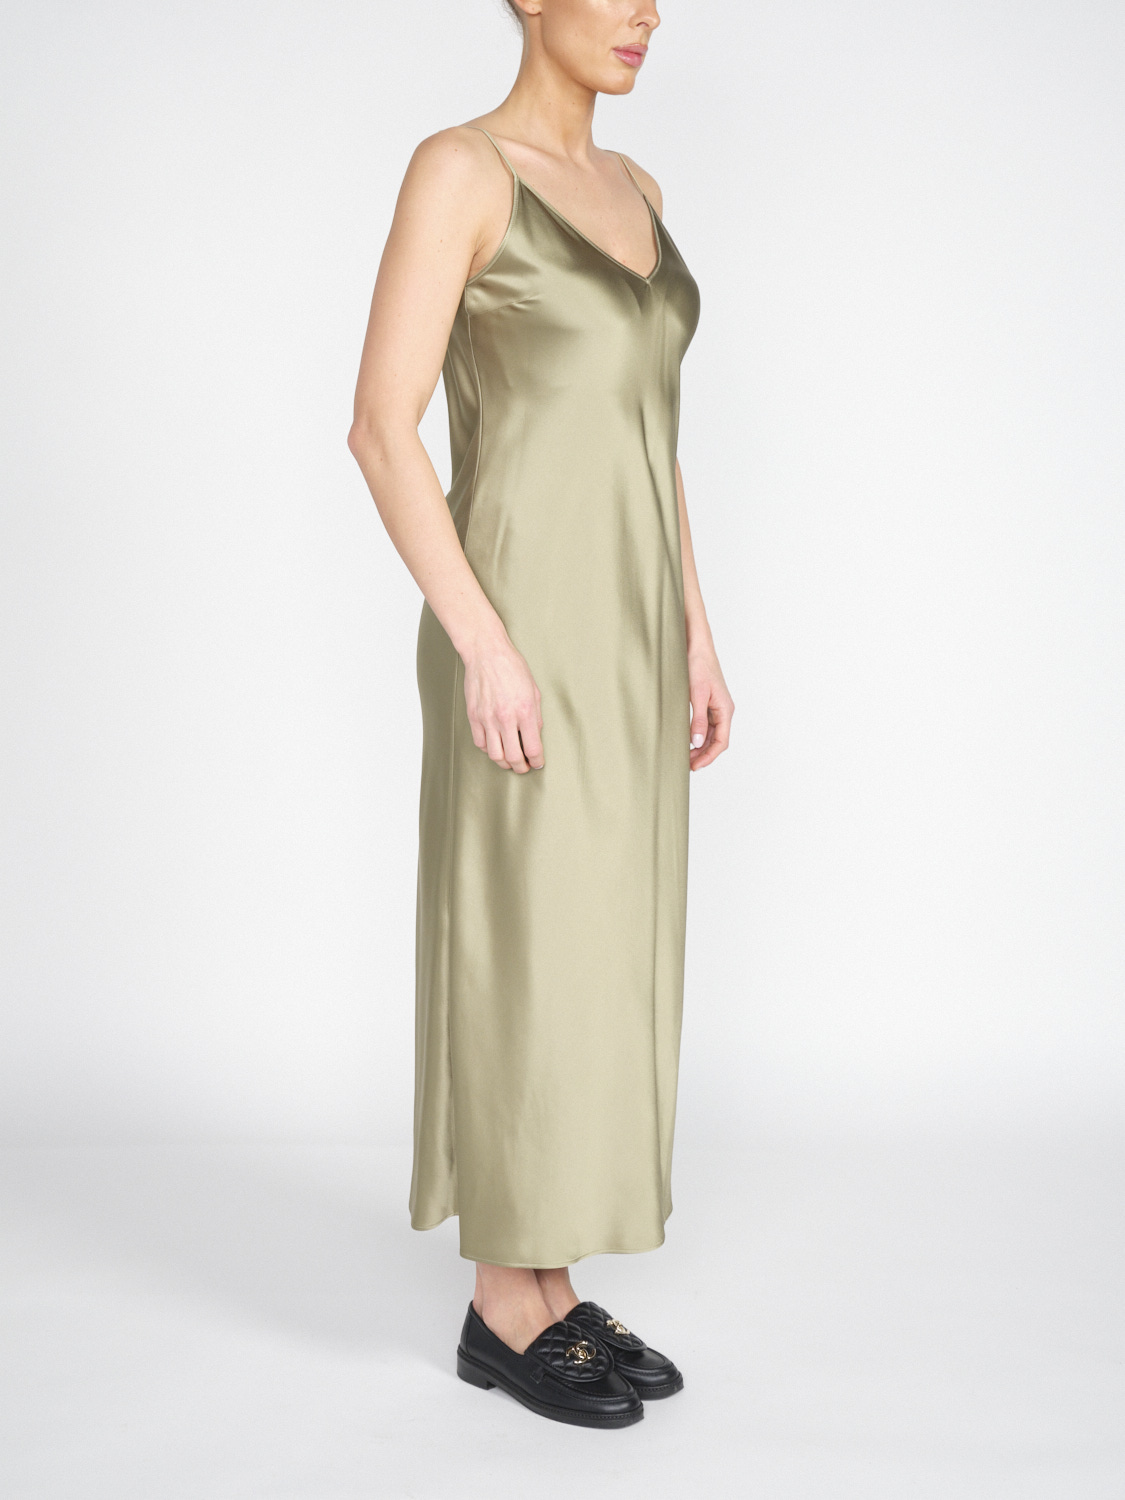 Joseph Clea Dress - silk satin midi dress  khaki 36